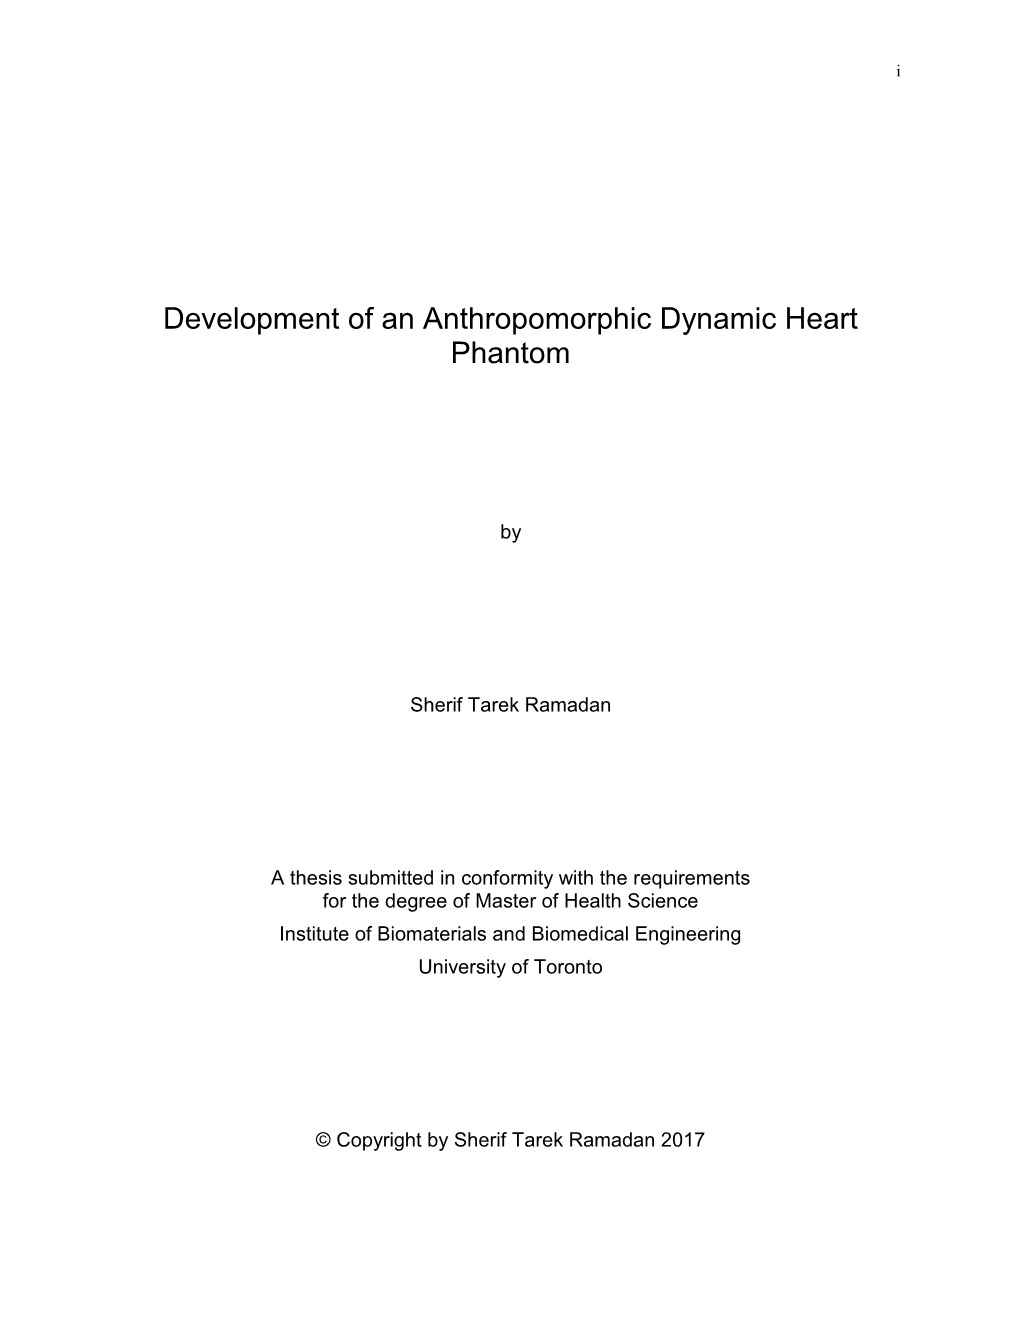 Development of an Anthropomorphic Dynamic Heart Phantom